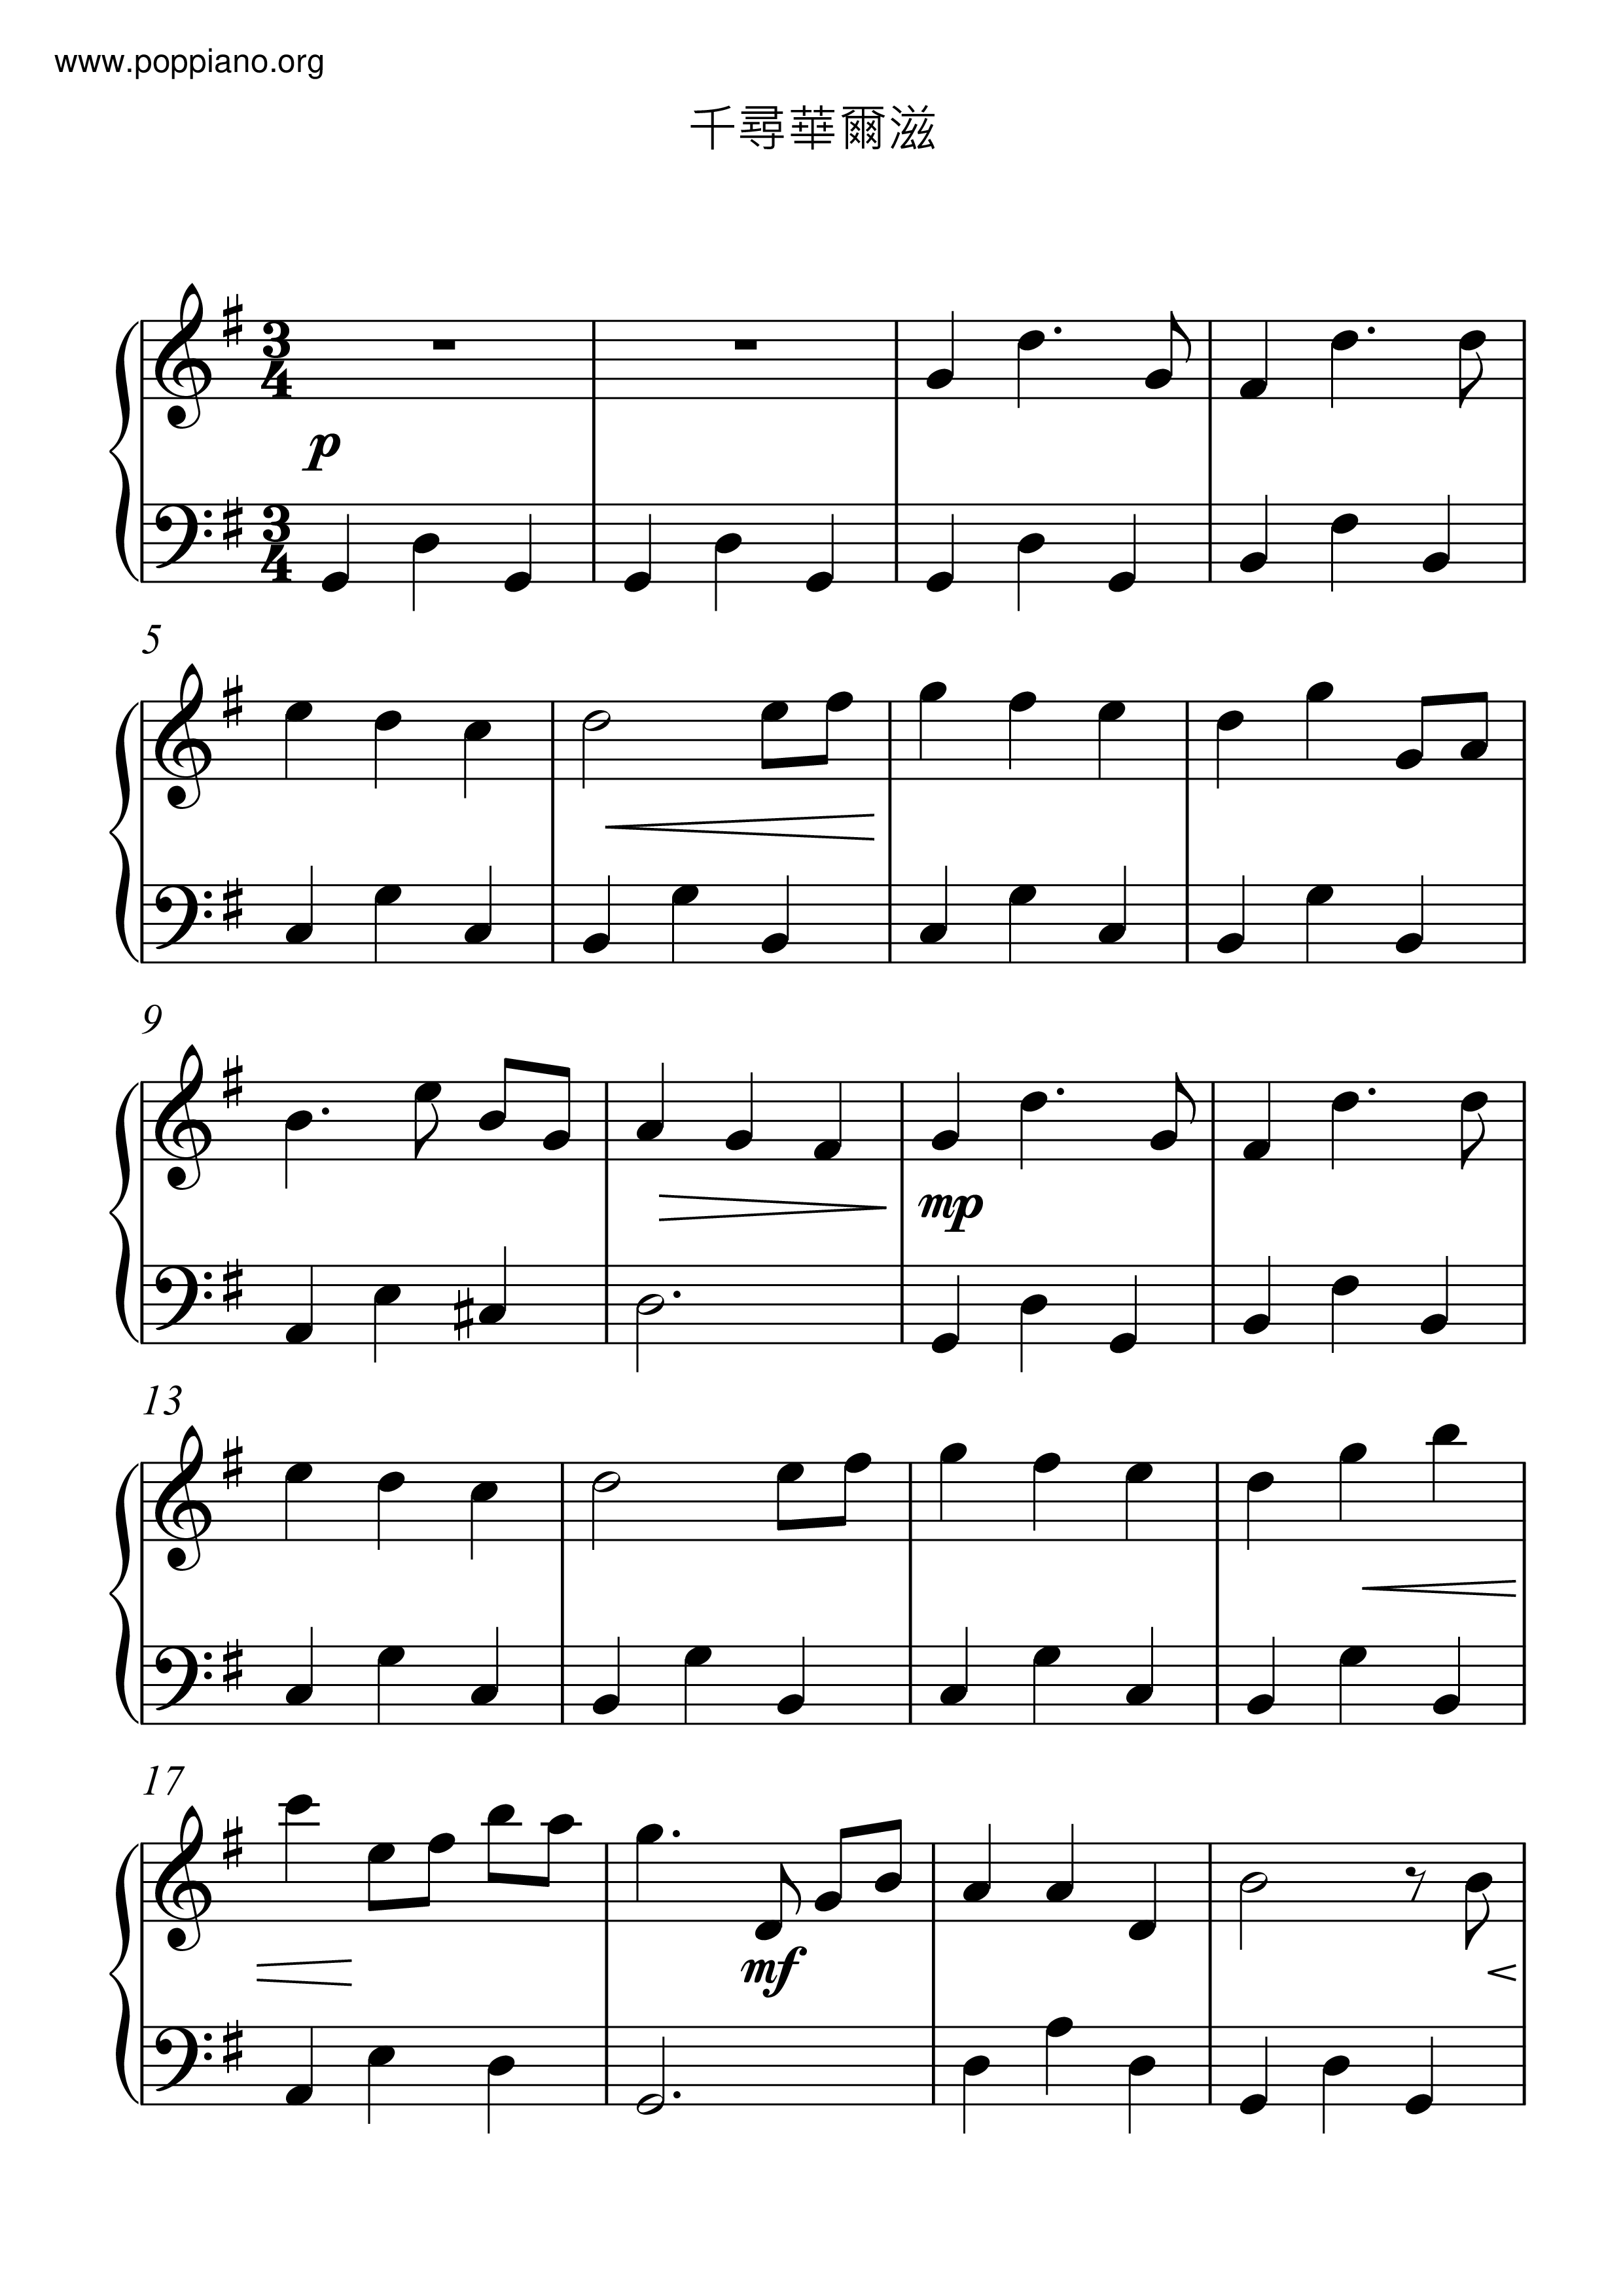 Spirited Away - Spirited Away's Waltz Score